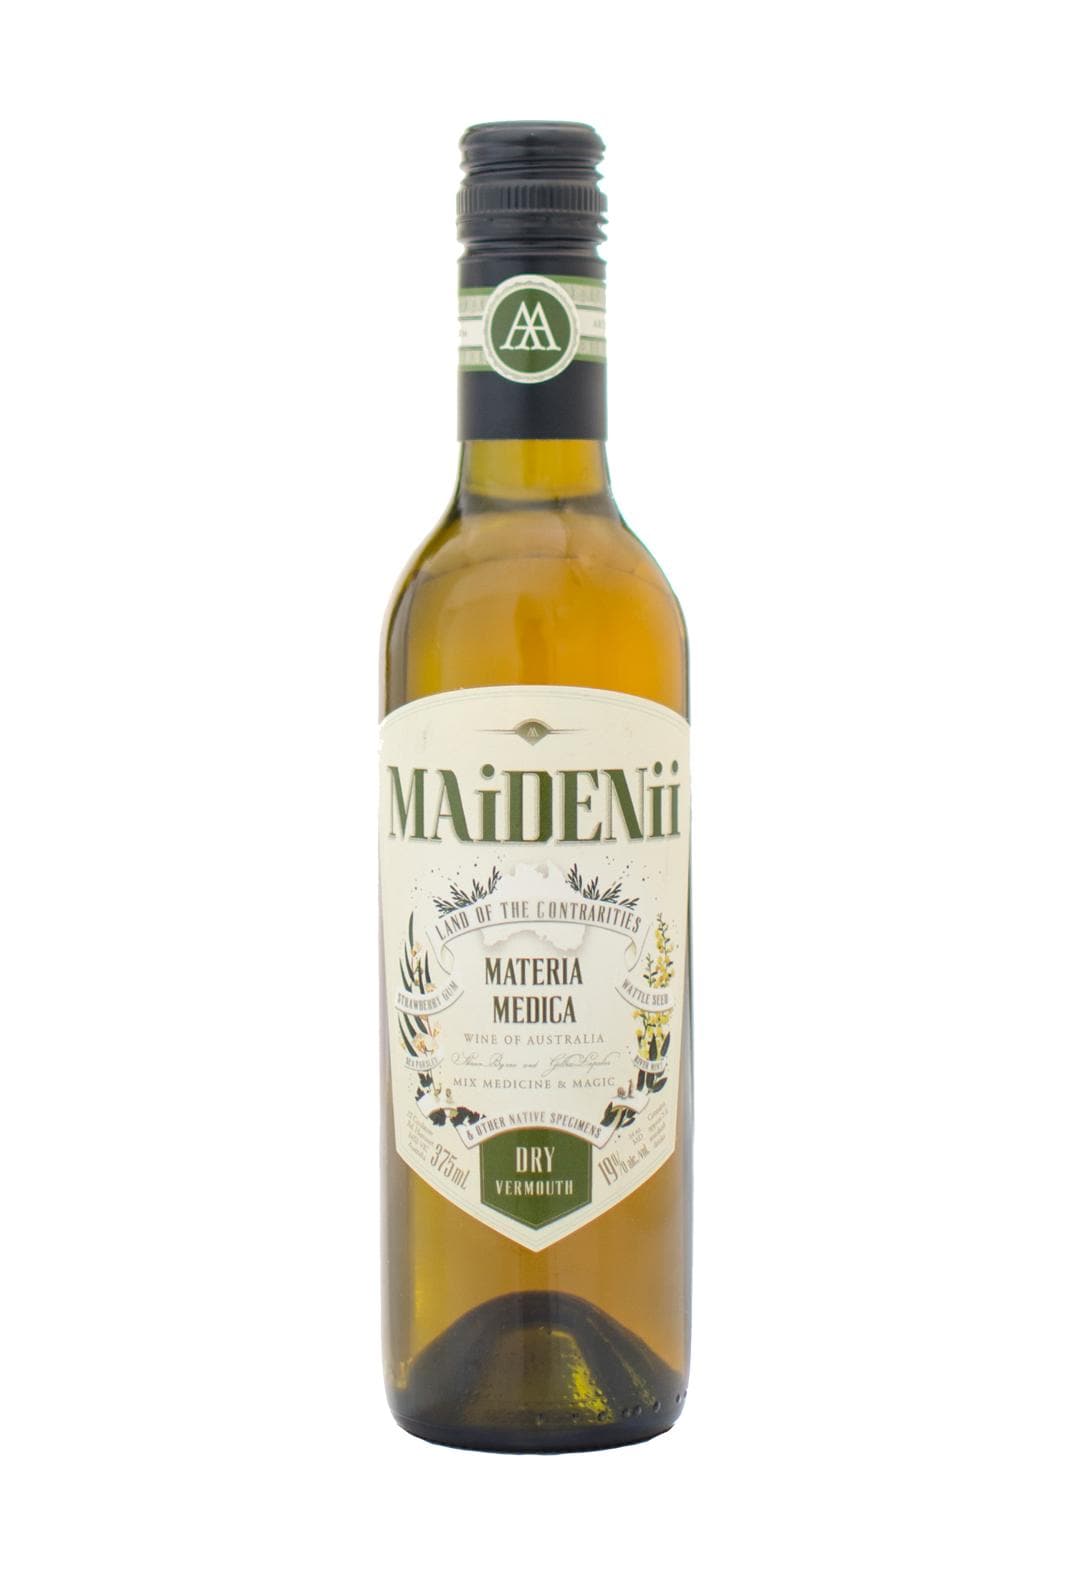 Maidenii Dry Vermouth 375ml 19% | Liquor & Spirits | Shop online at Spirits of France